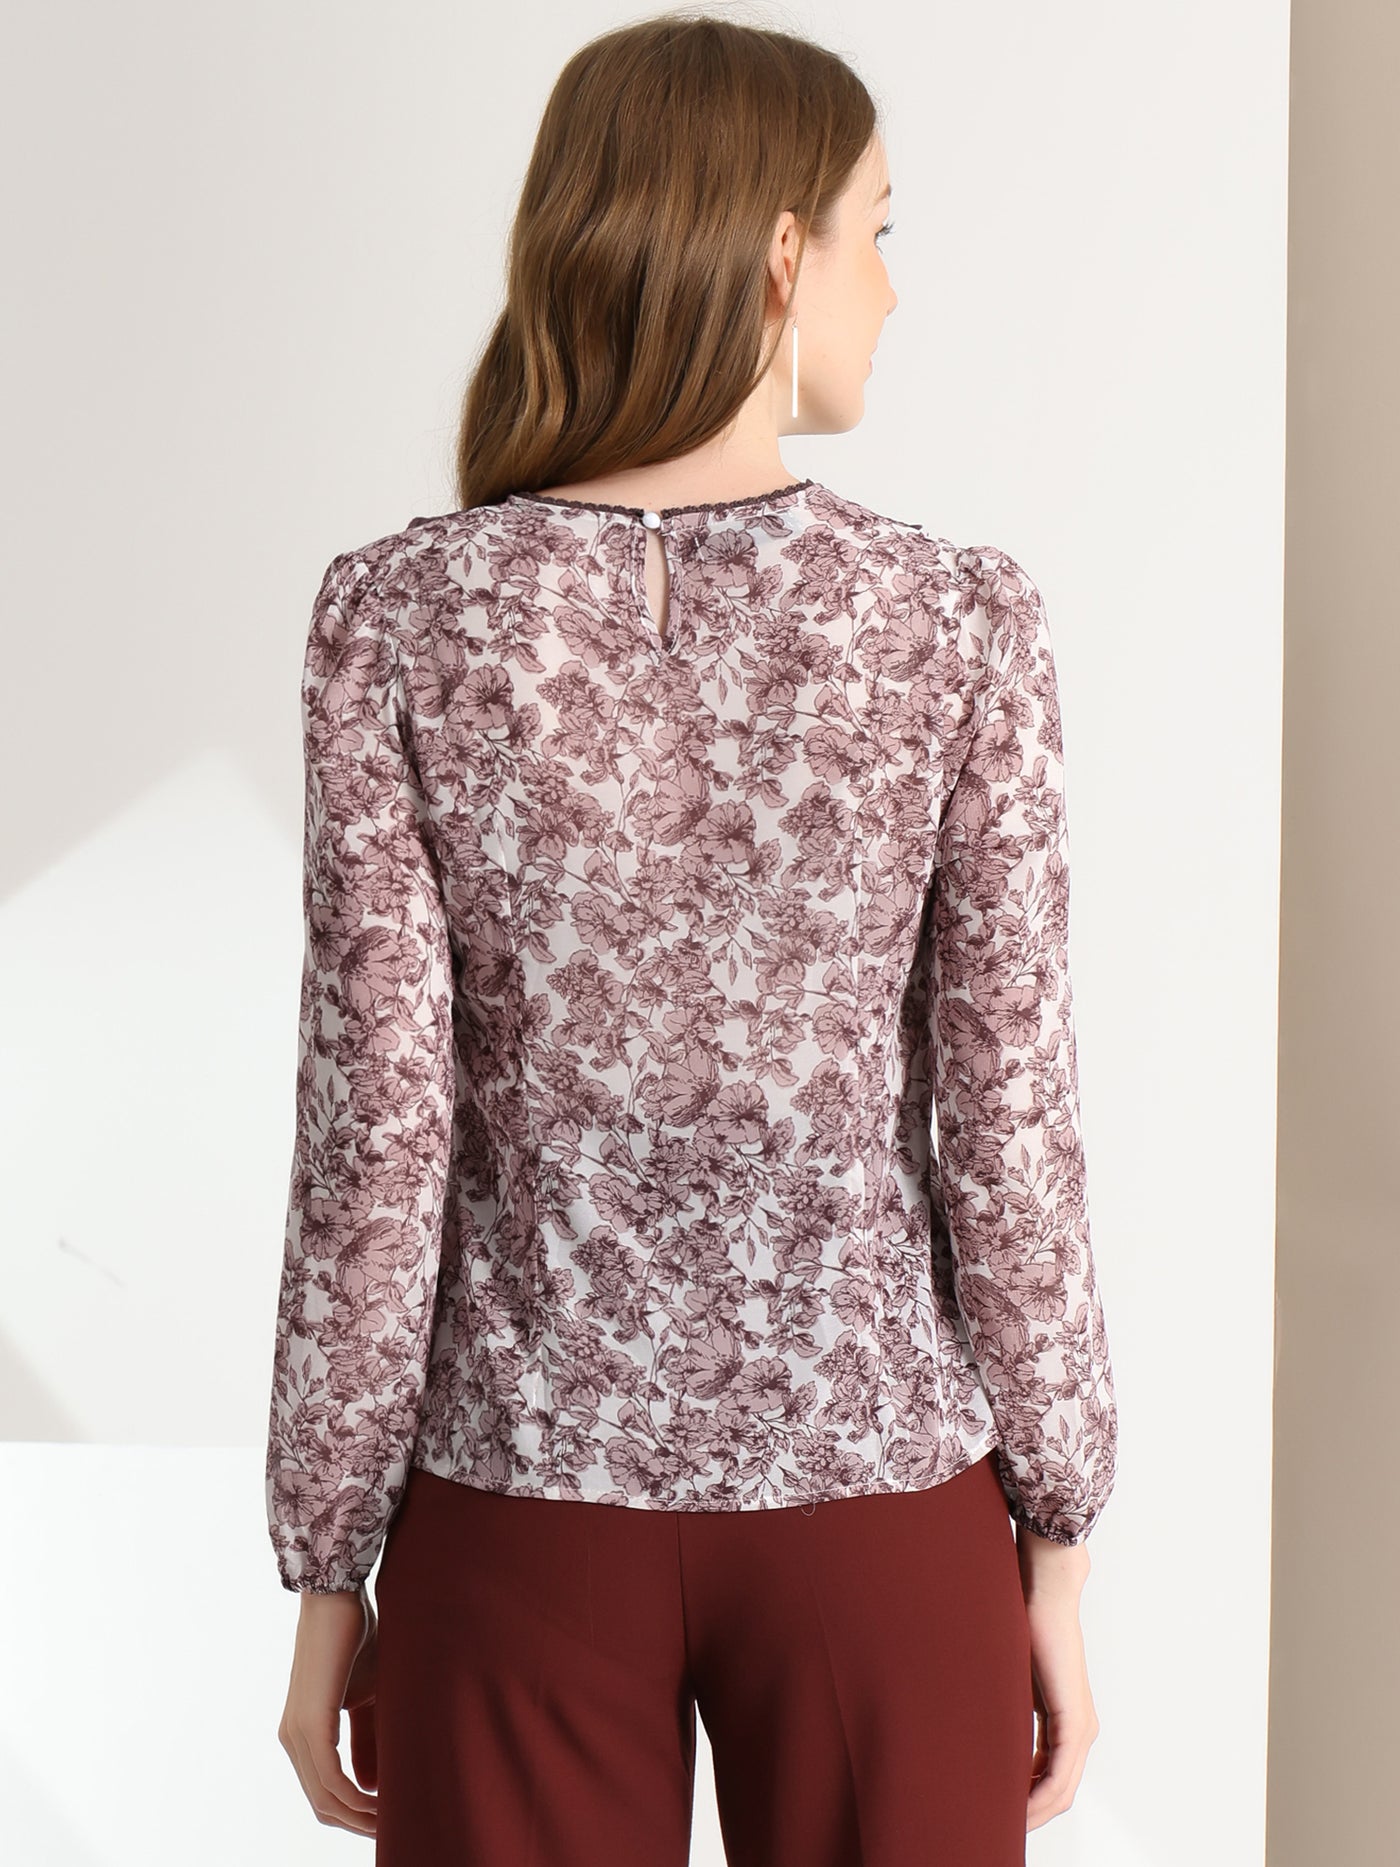 Allegra K Elegant Lace Panel Tops Long Sleeve Chiffon Floral Blouse